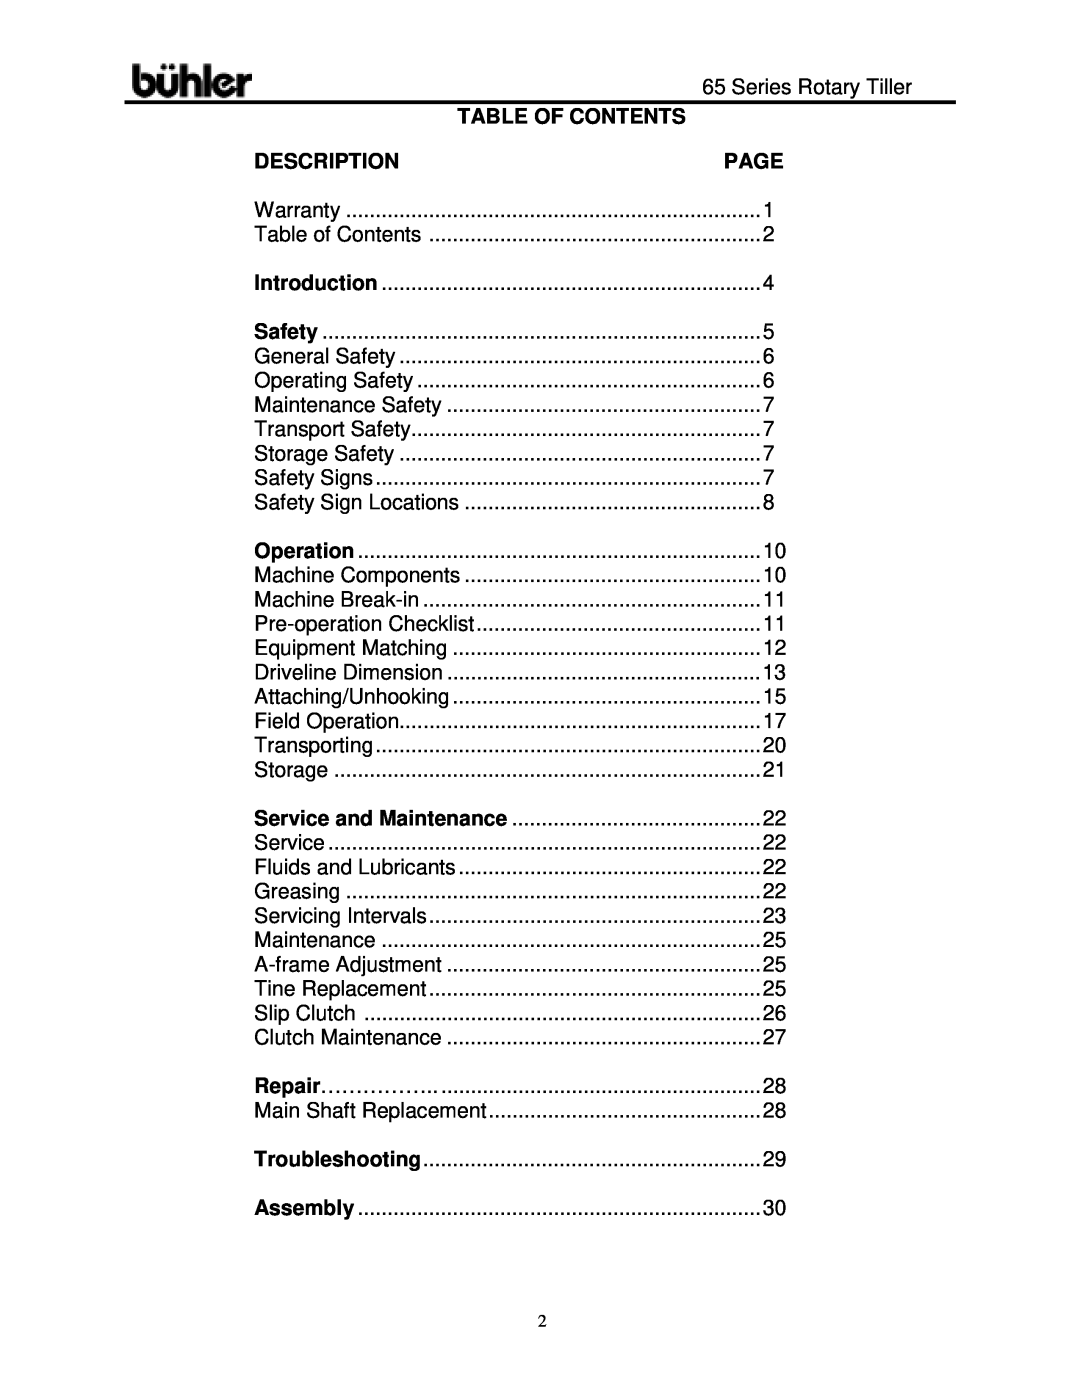 Buhler 65 Series warranty Table Of Contents, Description, Page 